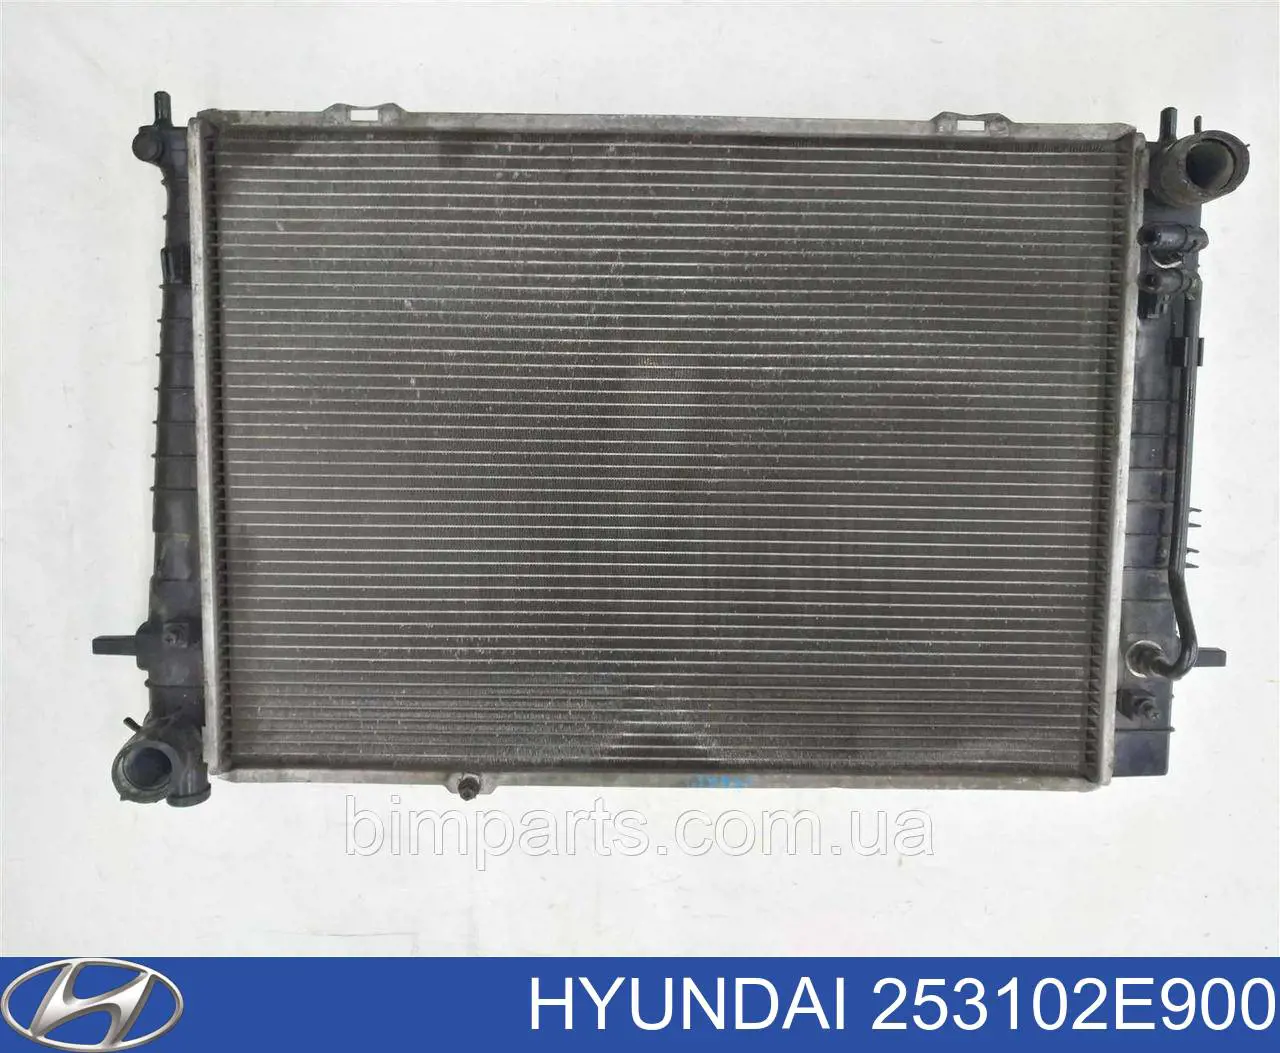 253102E900 Hyundai/Kia радиатор